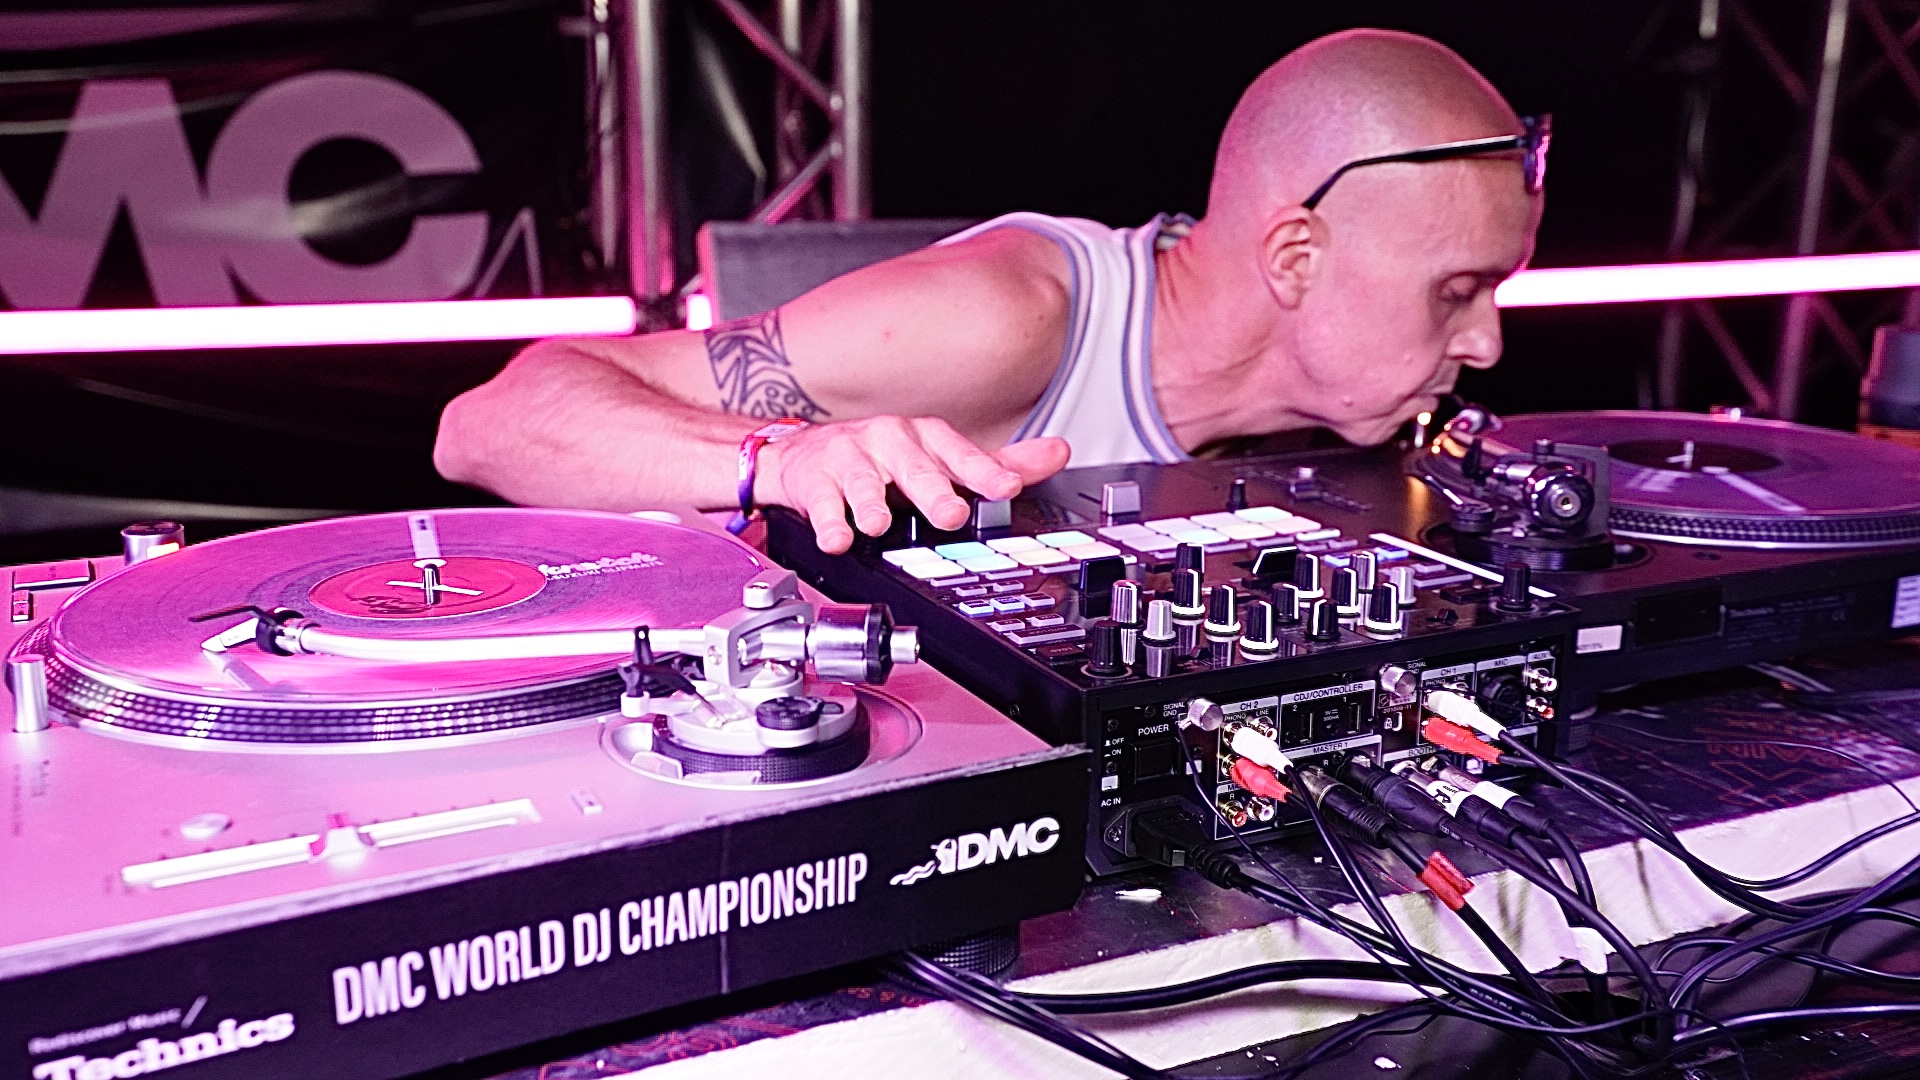 DMC World DJ Championships